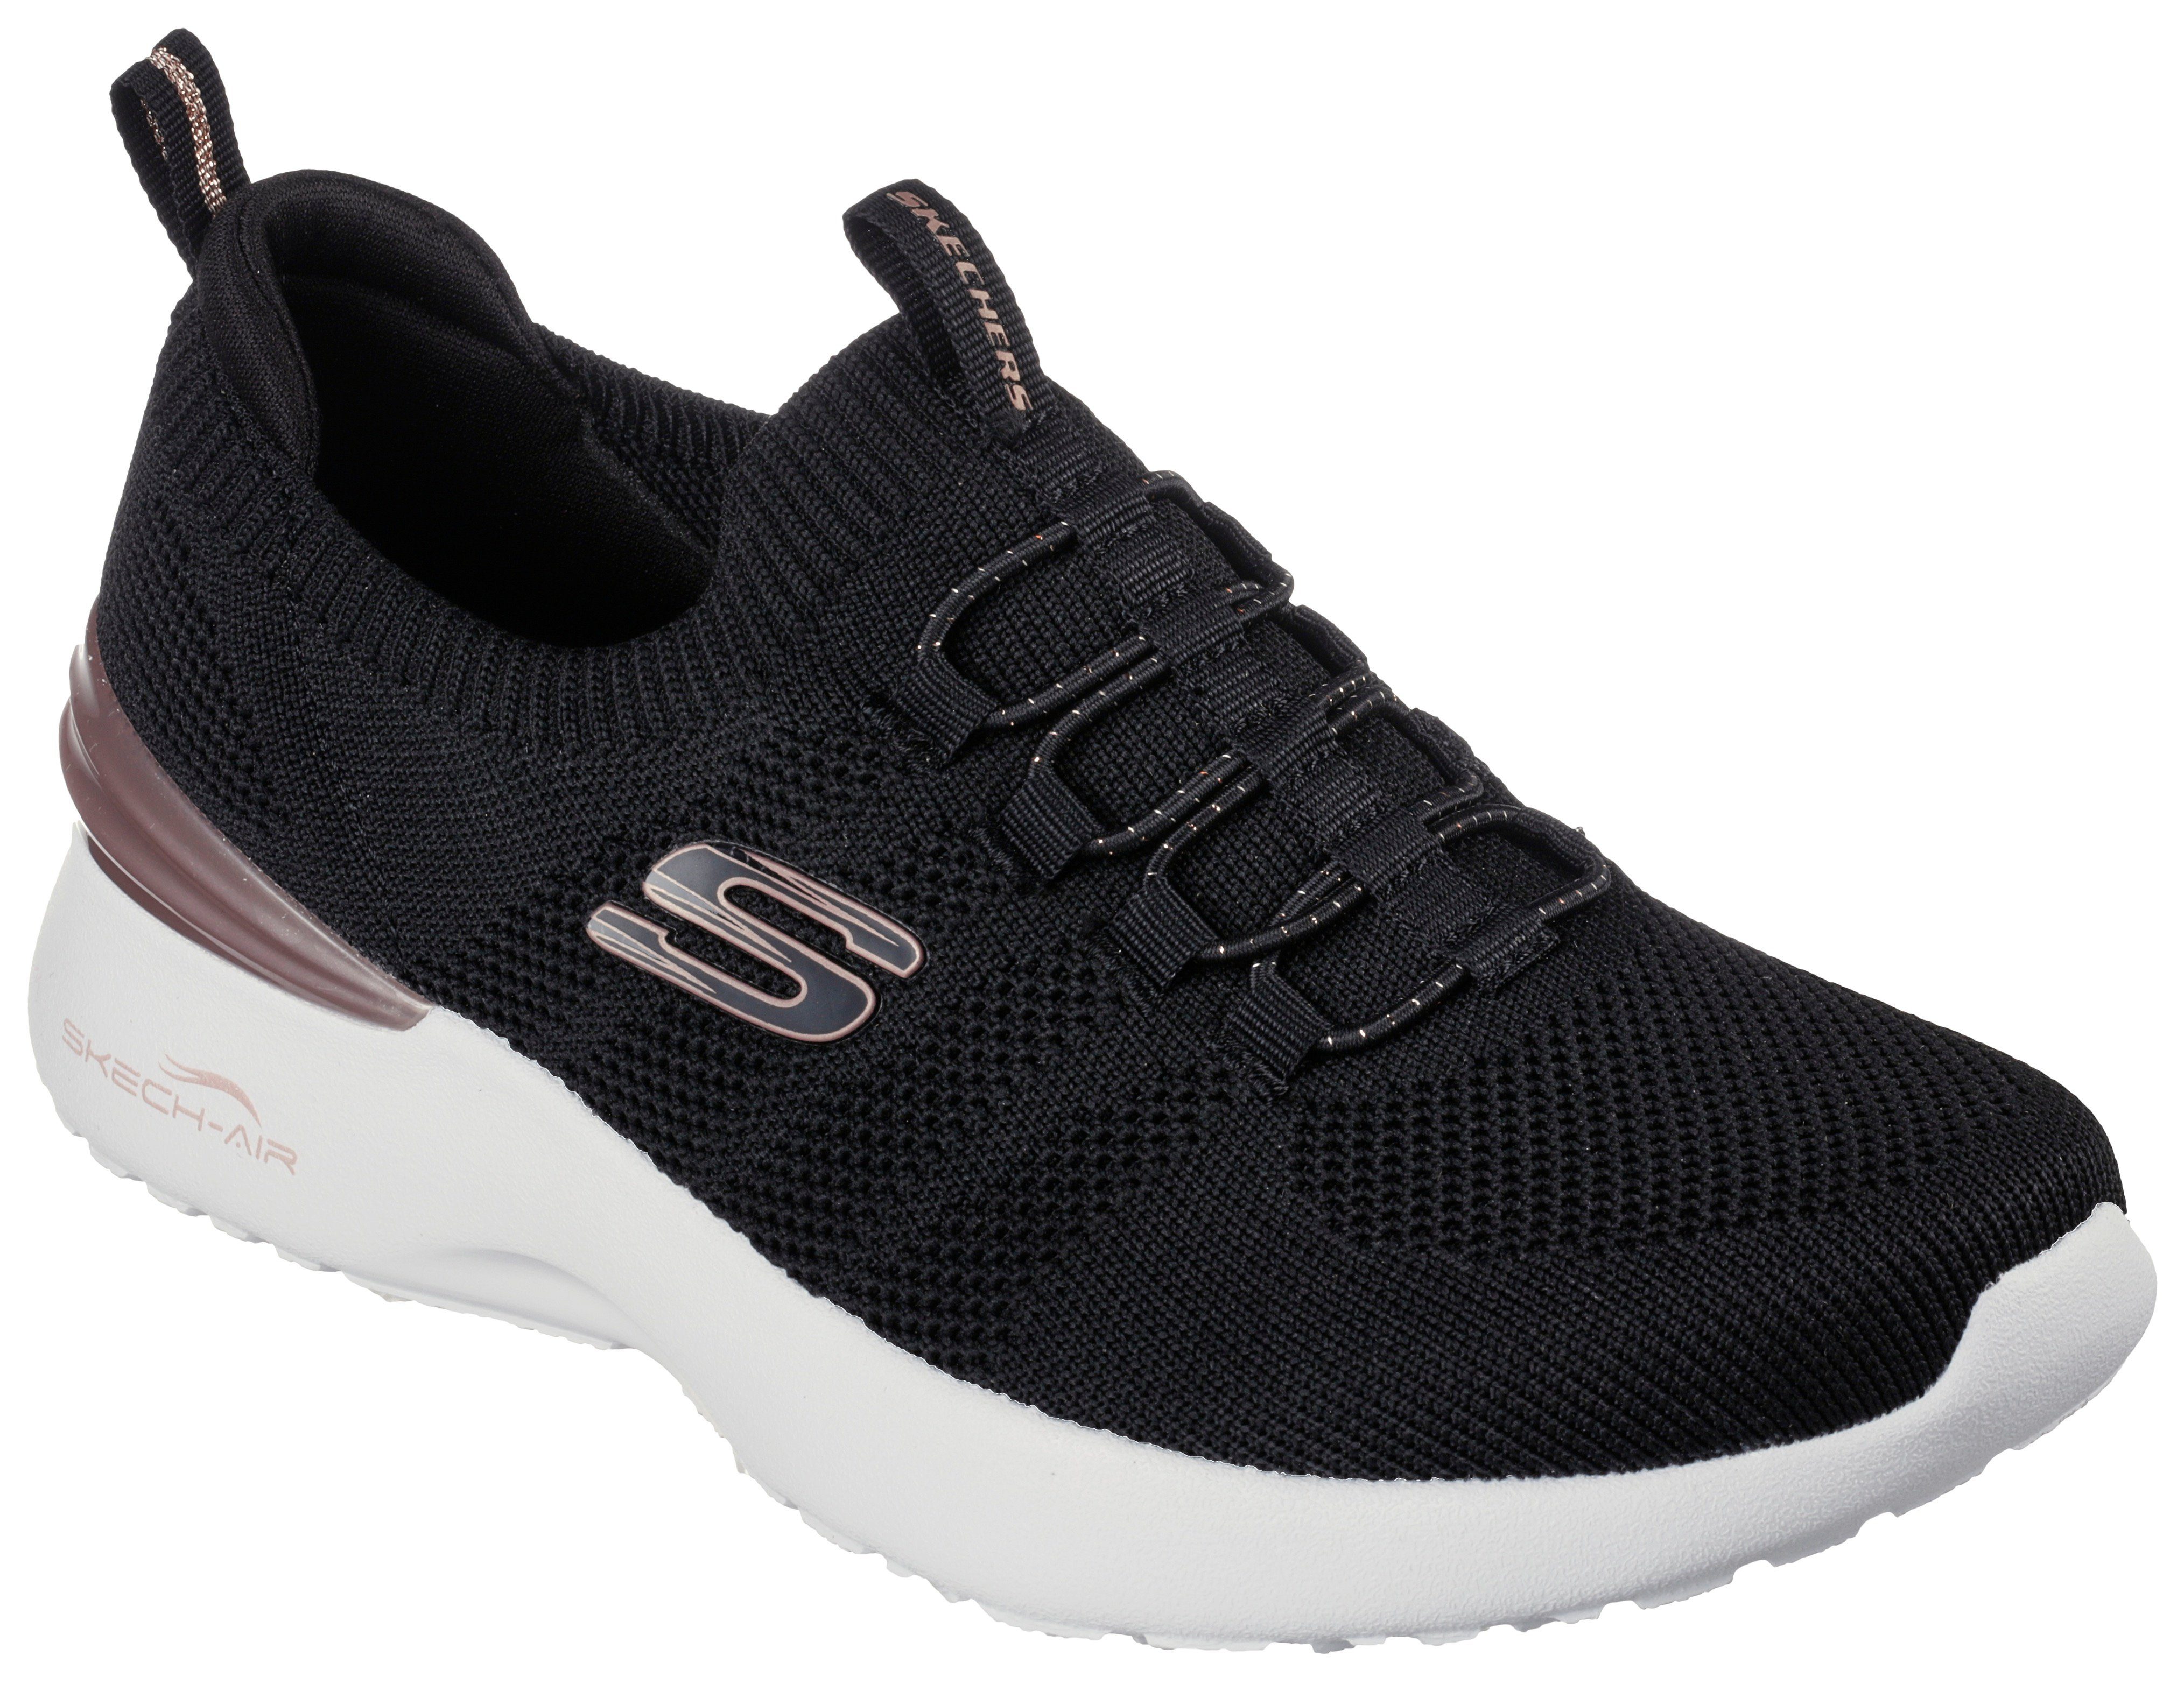 Skechers SKECH-AIR DYNAMIGHT - Slip-On Sneaker mit Gummizug schwarz-roségoldfarben